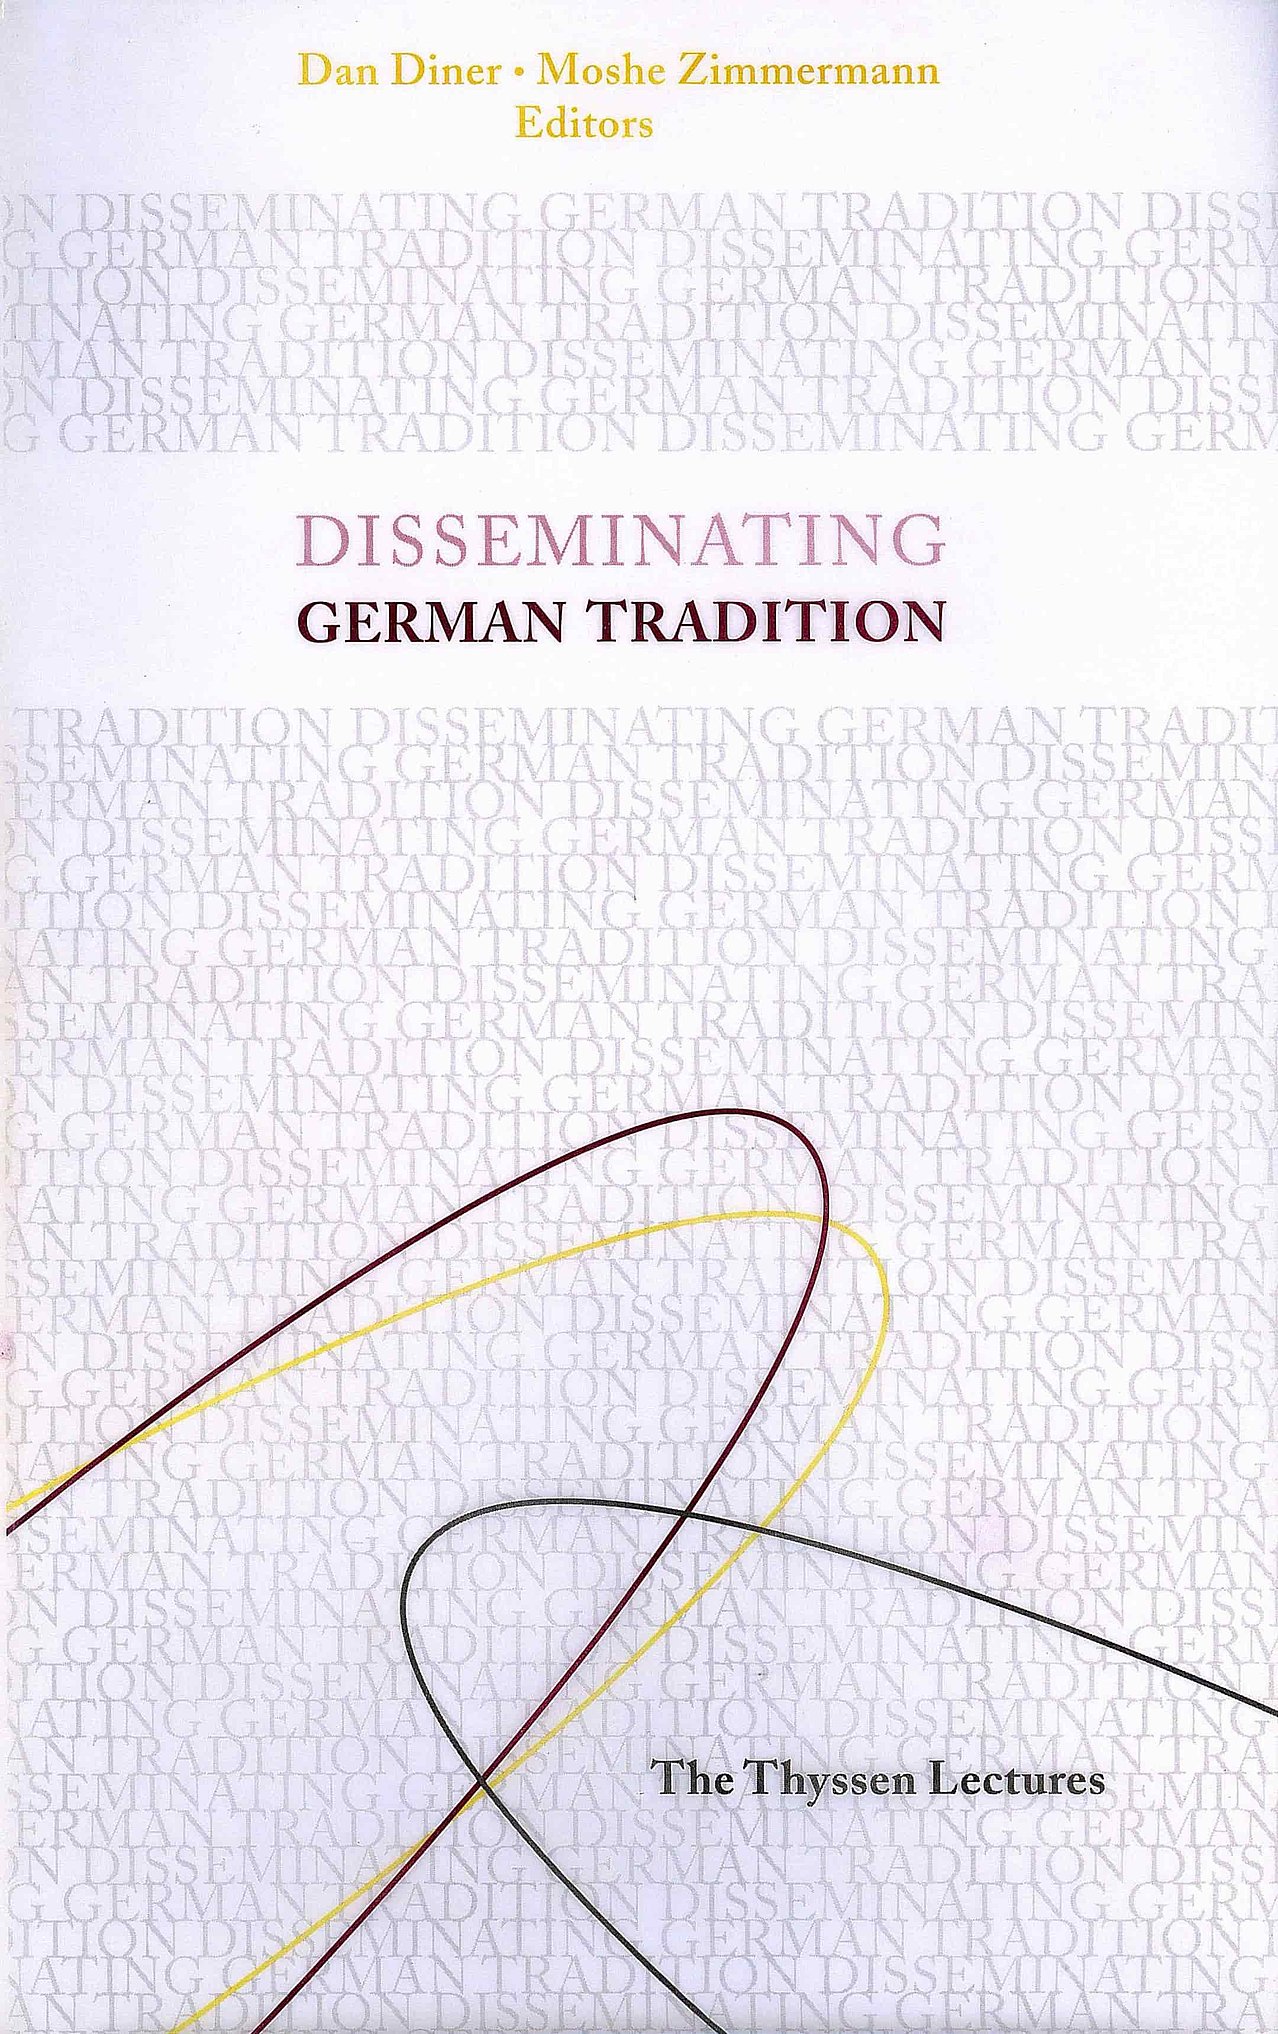 Publikation, Disseminating German Tradition, 2009